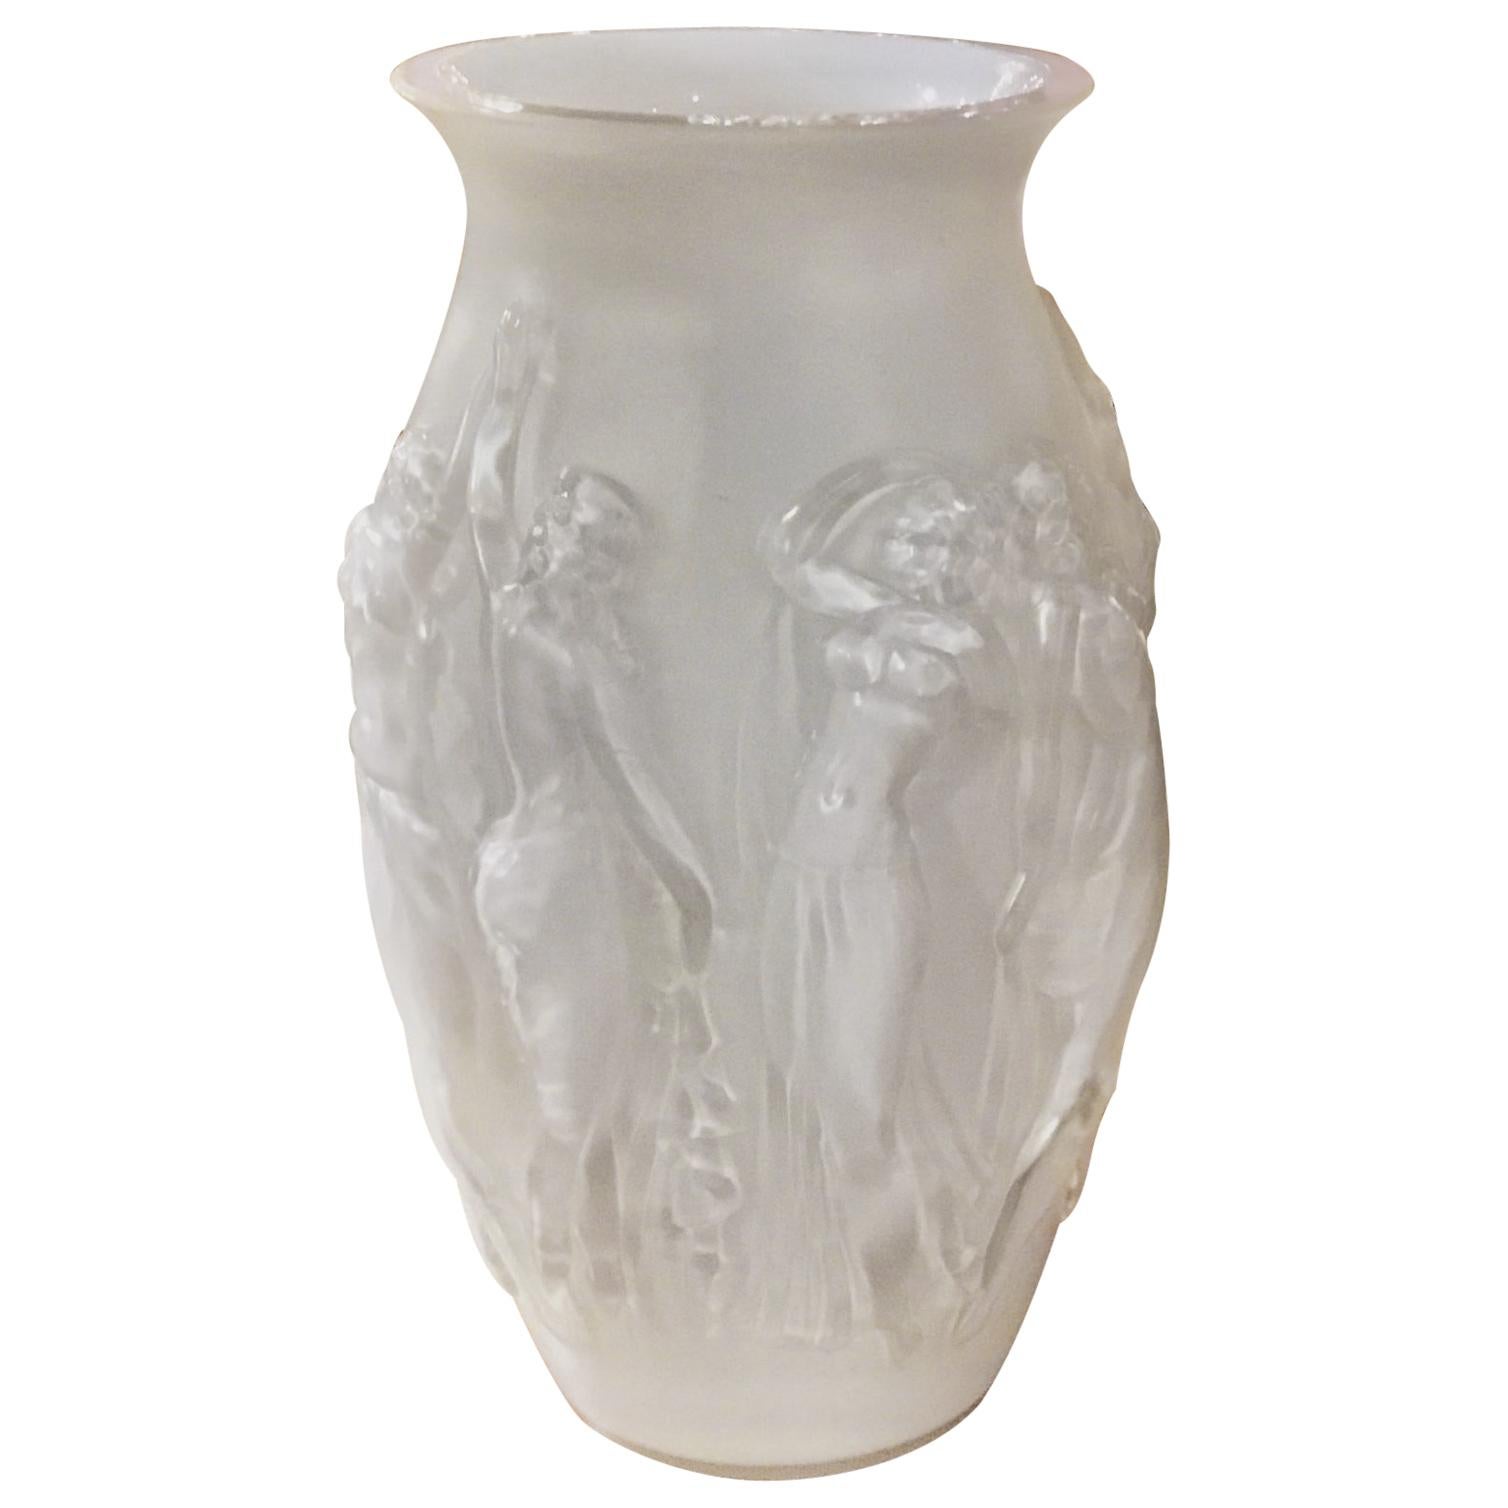 Sabino/France Mouth Blown Vase “La Danse” in Translucent White Glass of Dancers